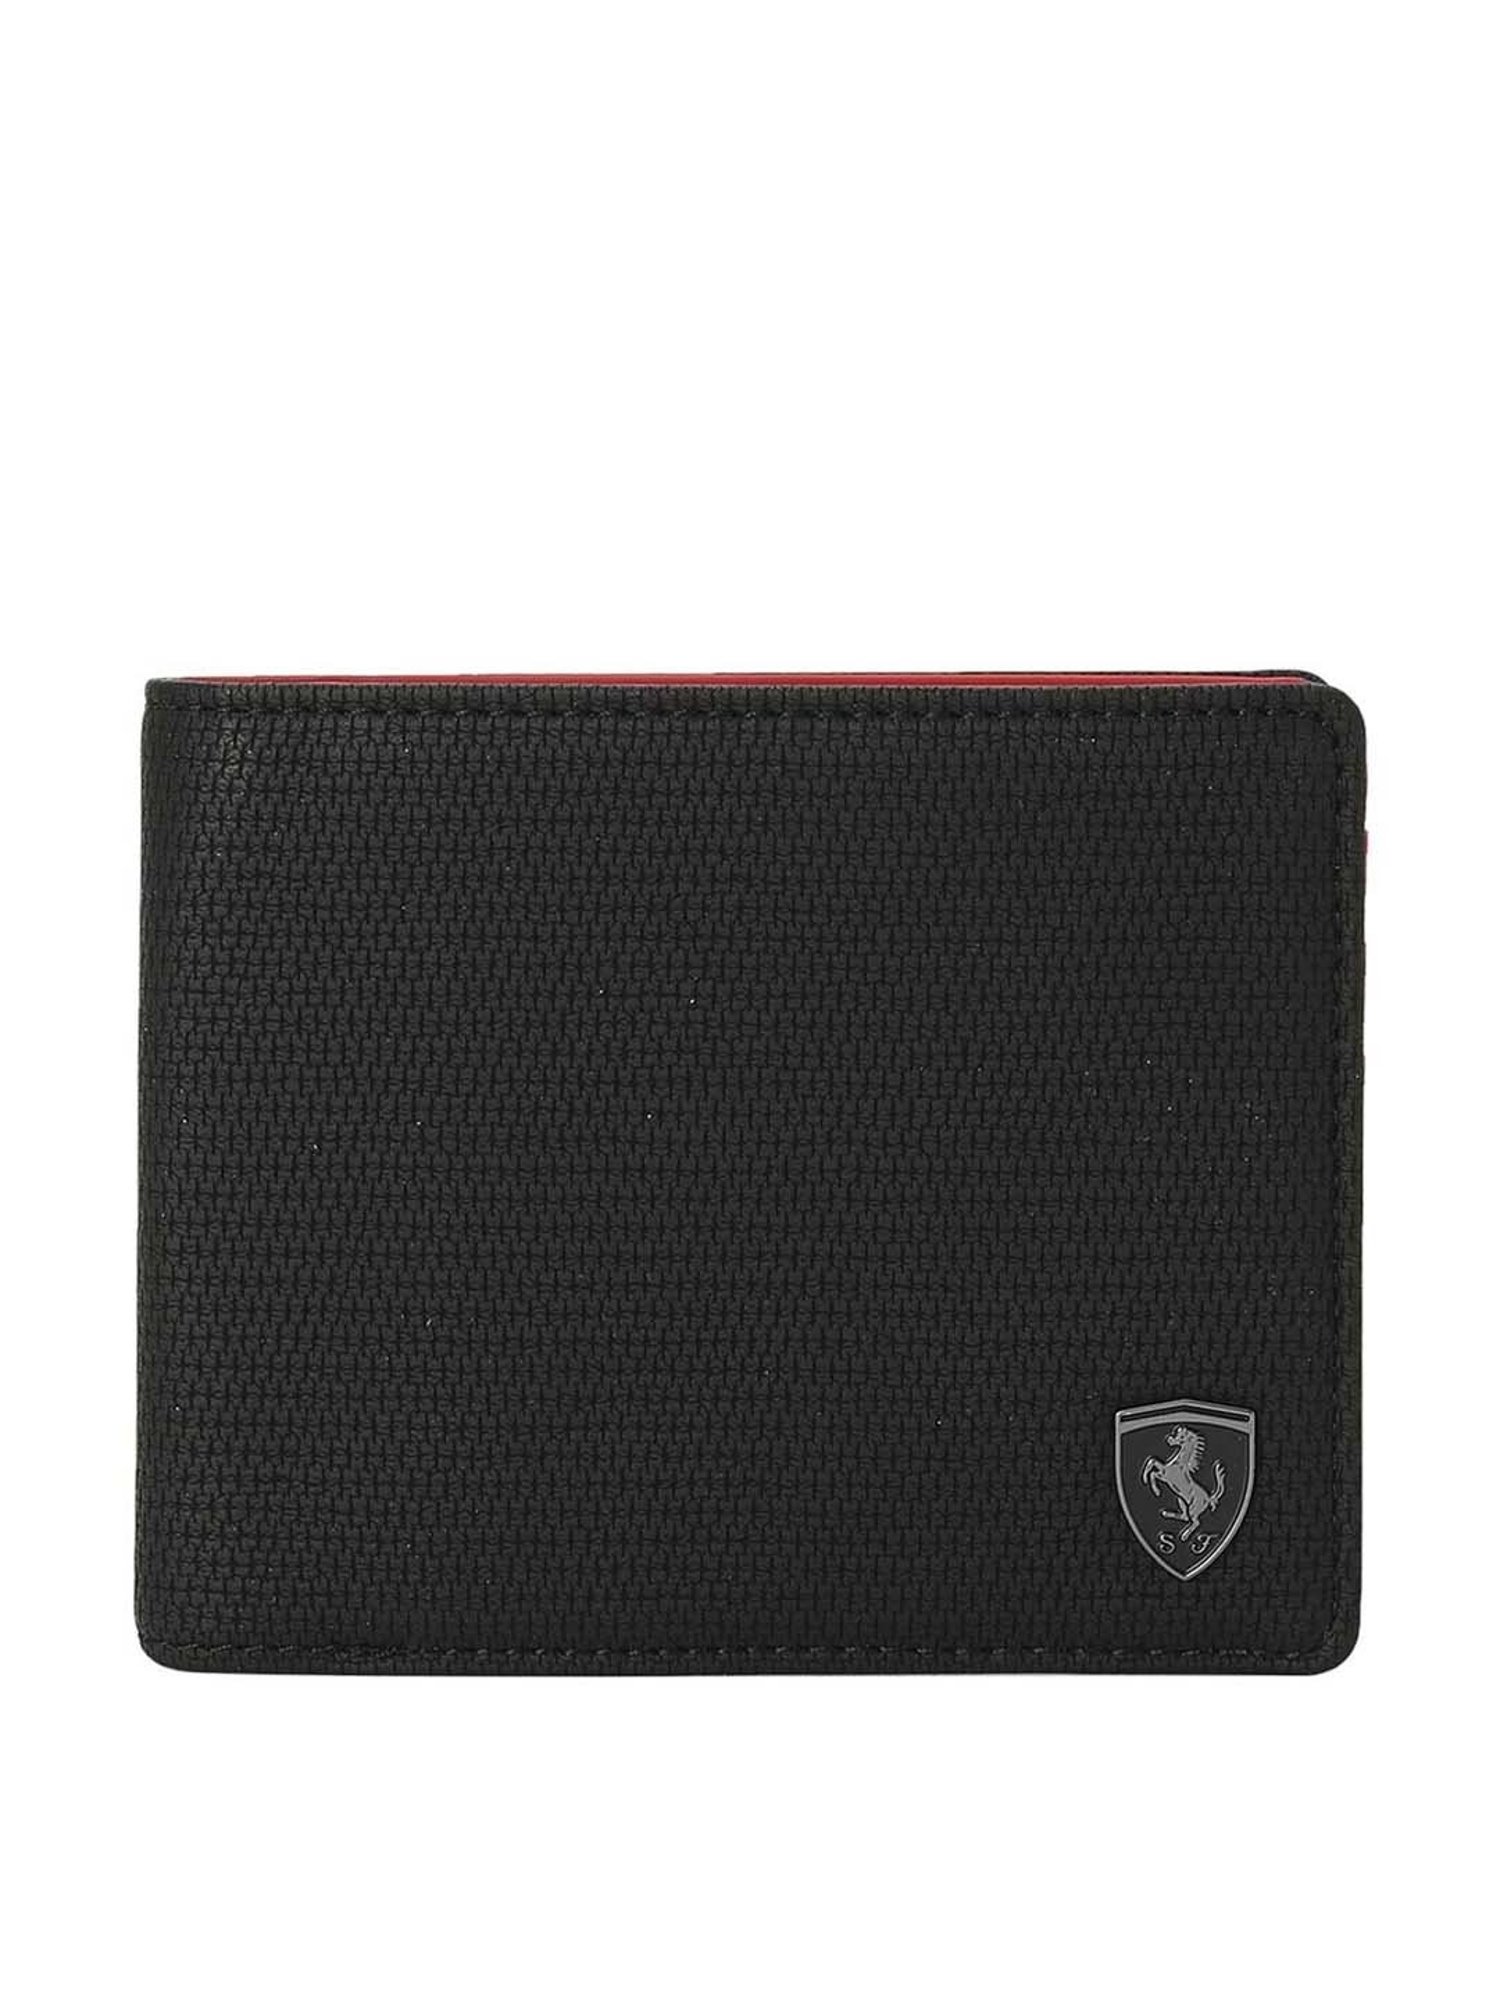 Ferrari Lifestyle Wallet | PUMA